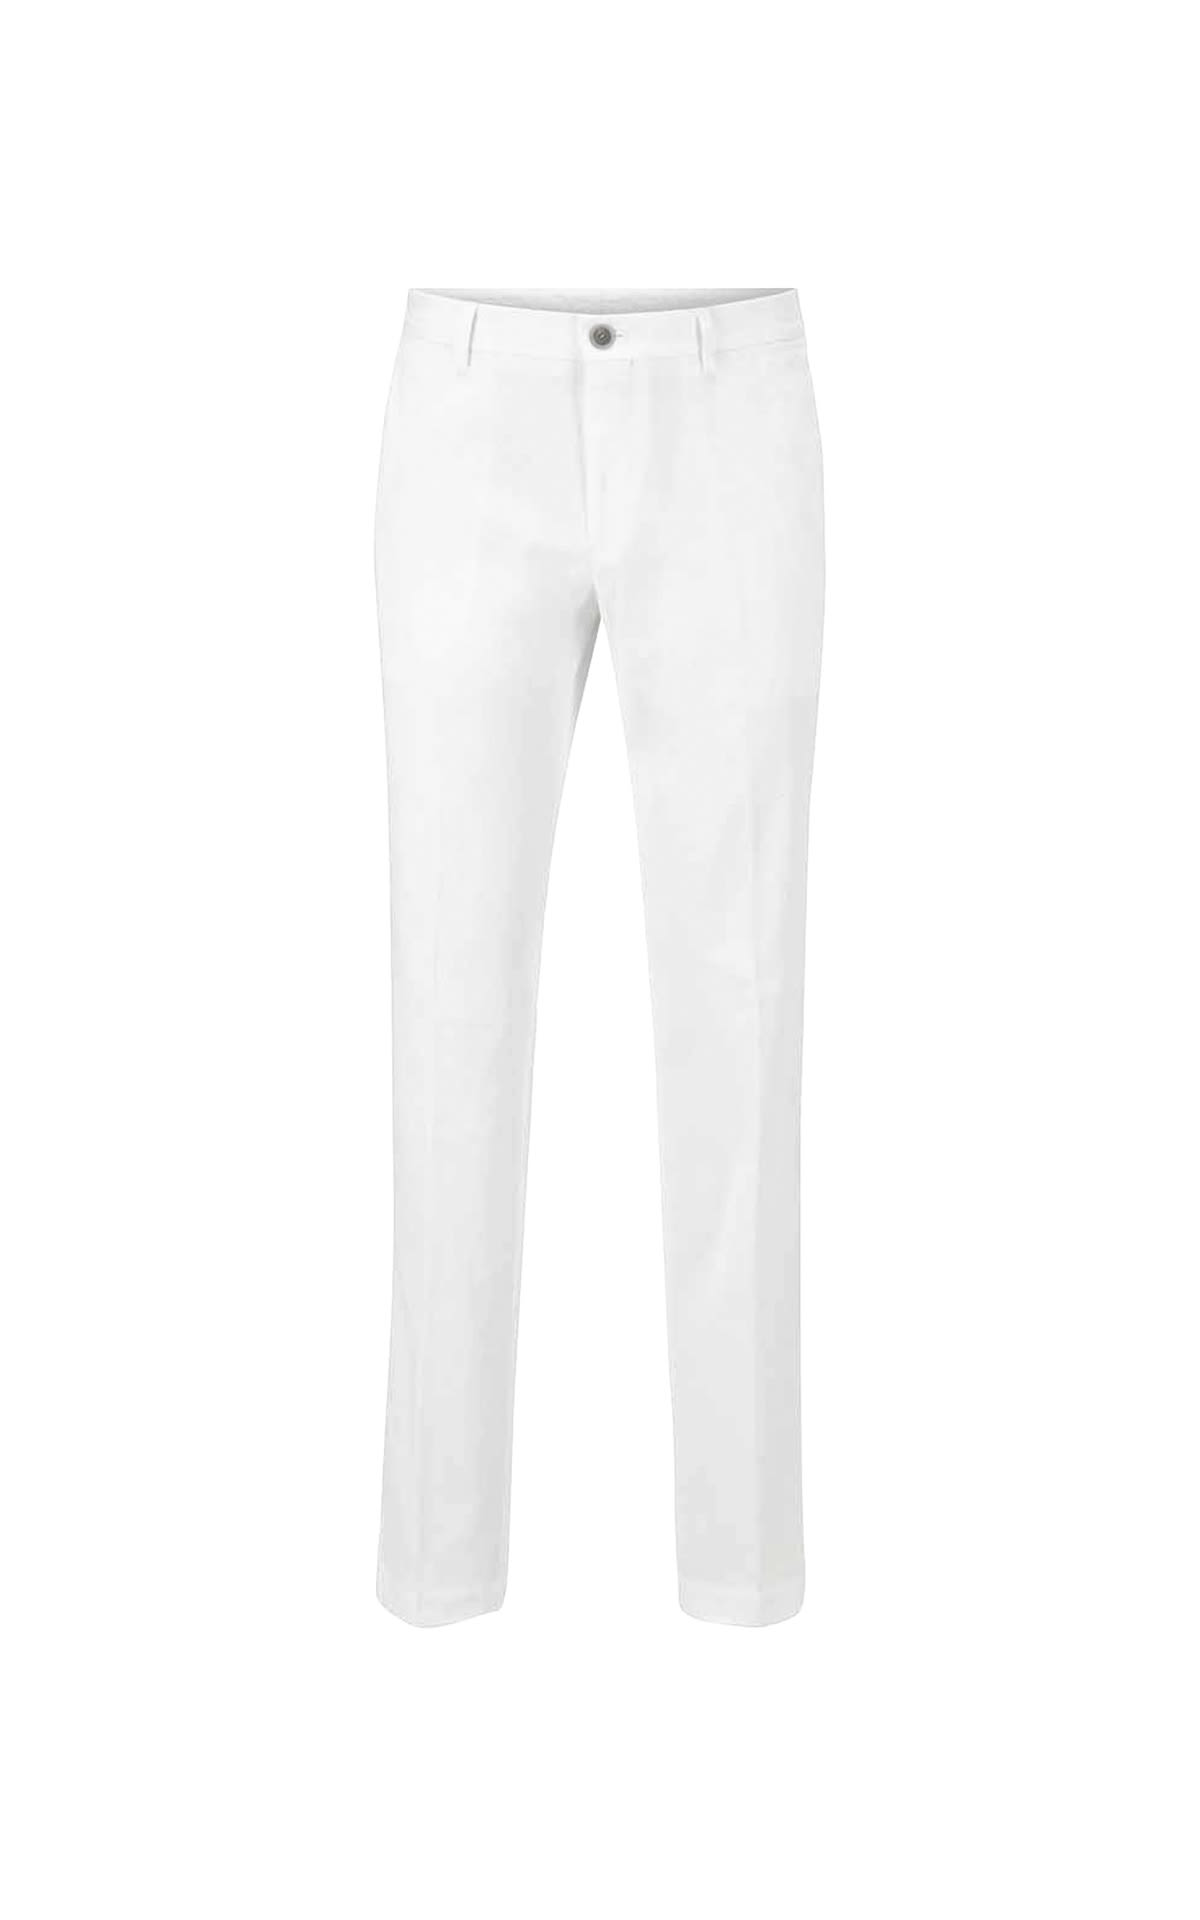 white jeans adolfo dominguez